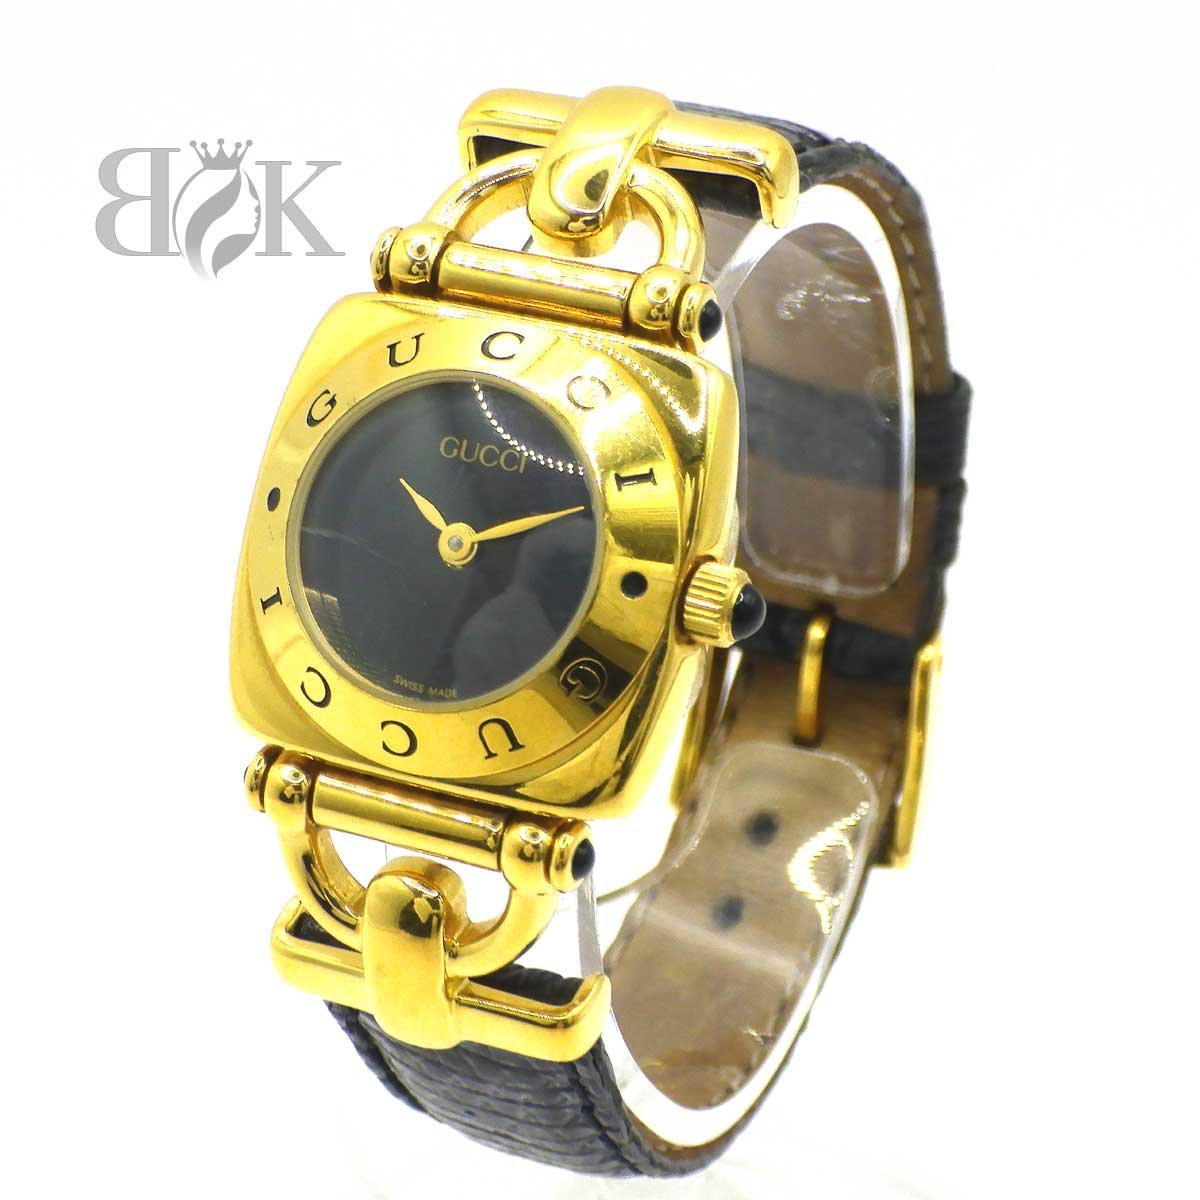  Gucci 6300 L кварц Gold кожа ремень наручные часы с футляром *